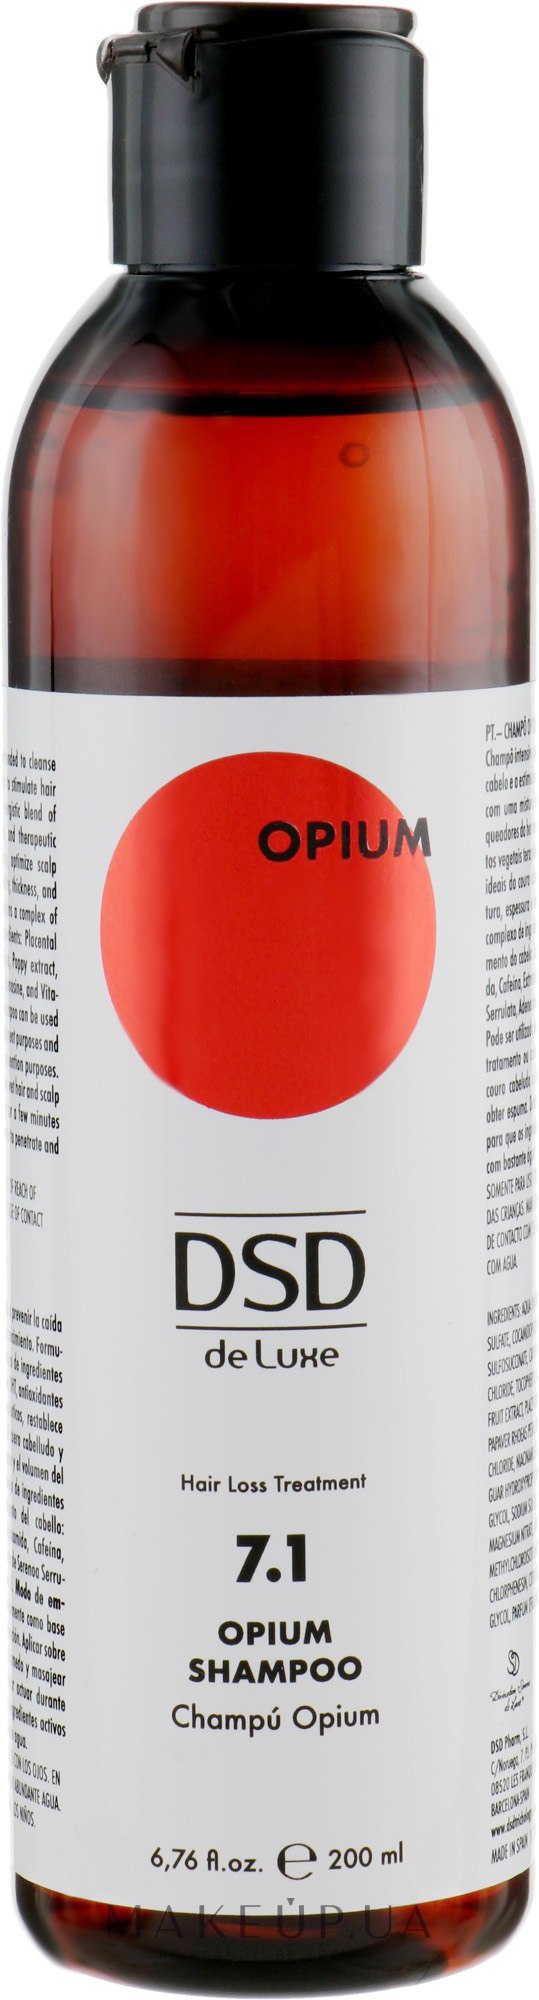 Шампунь для волос - Simone DSD De Luxe 7.1 Opium Shampoo — фото 200ml